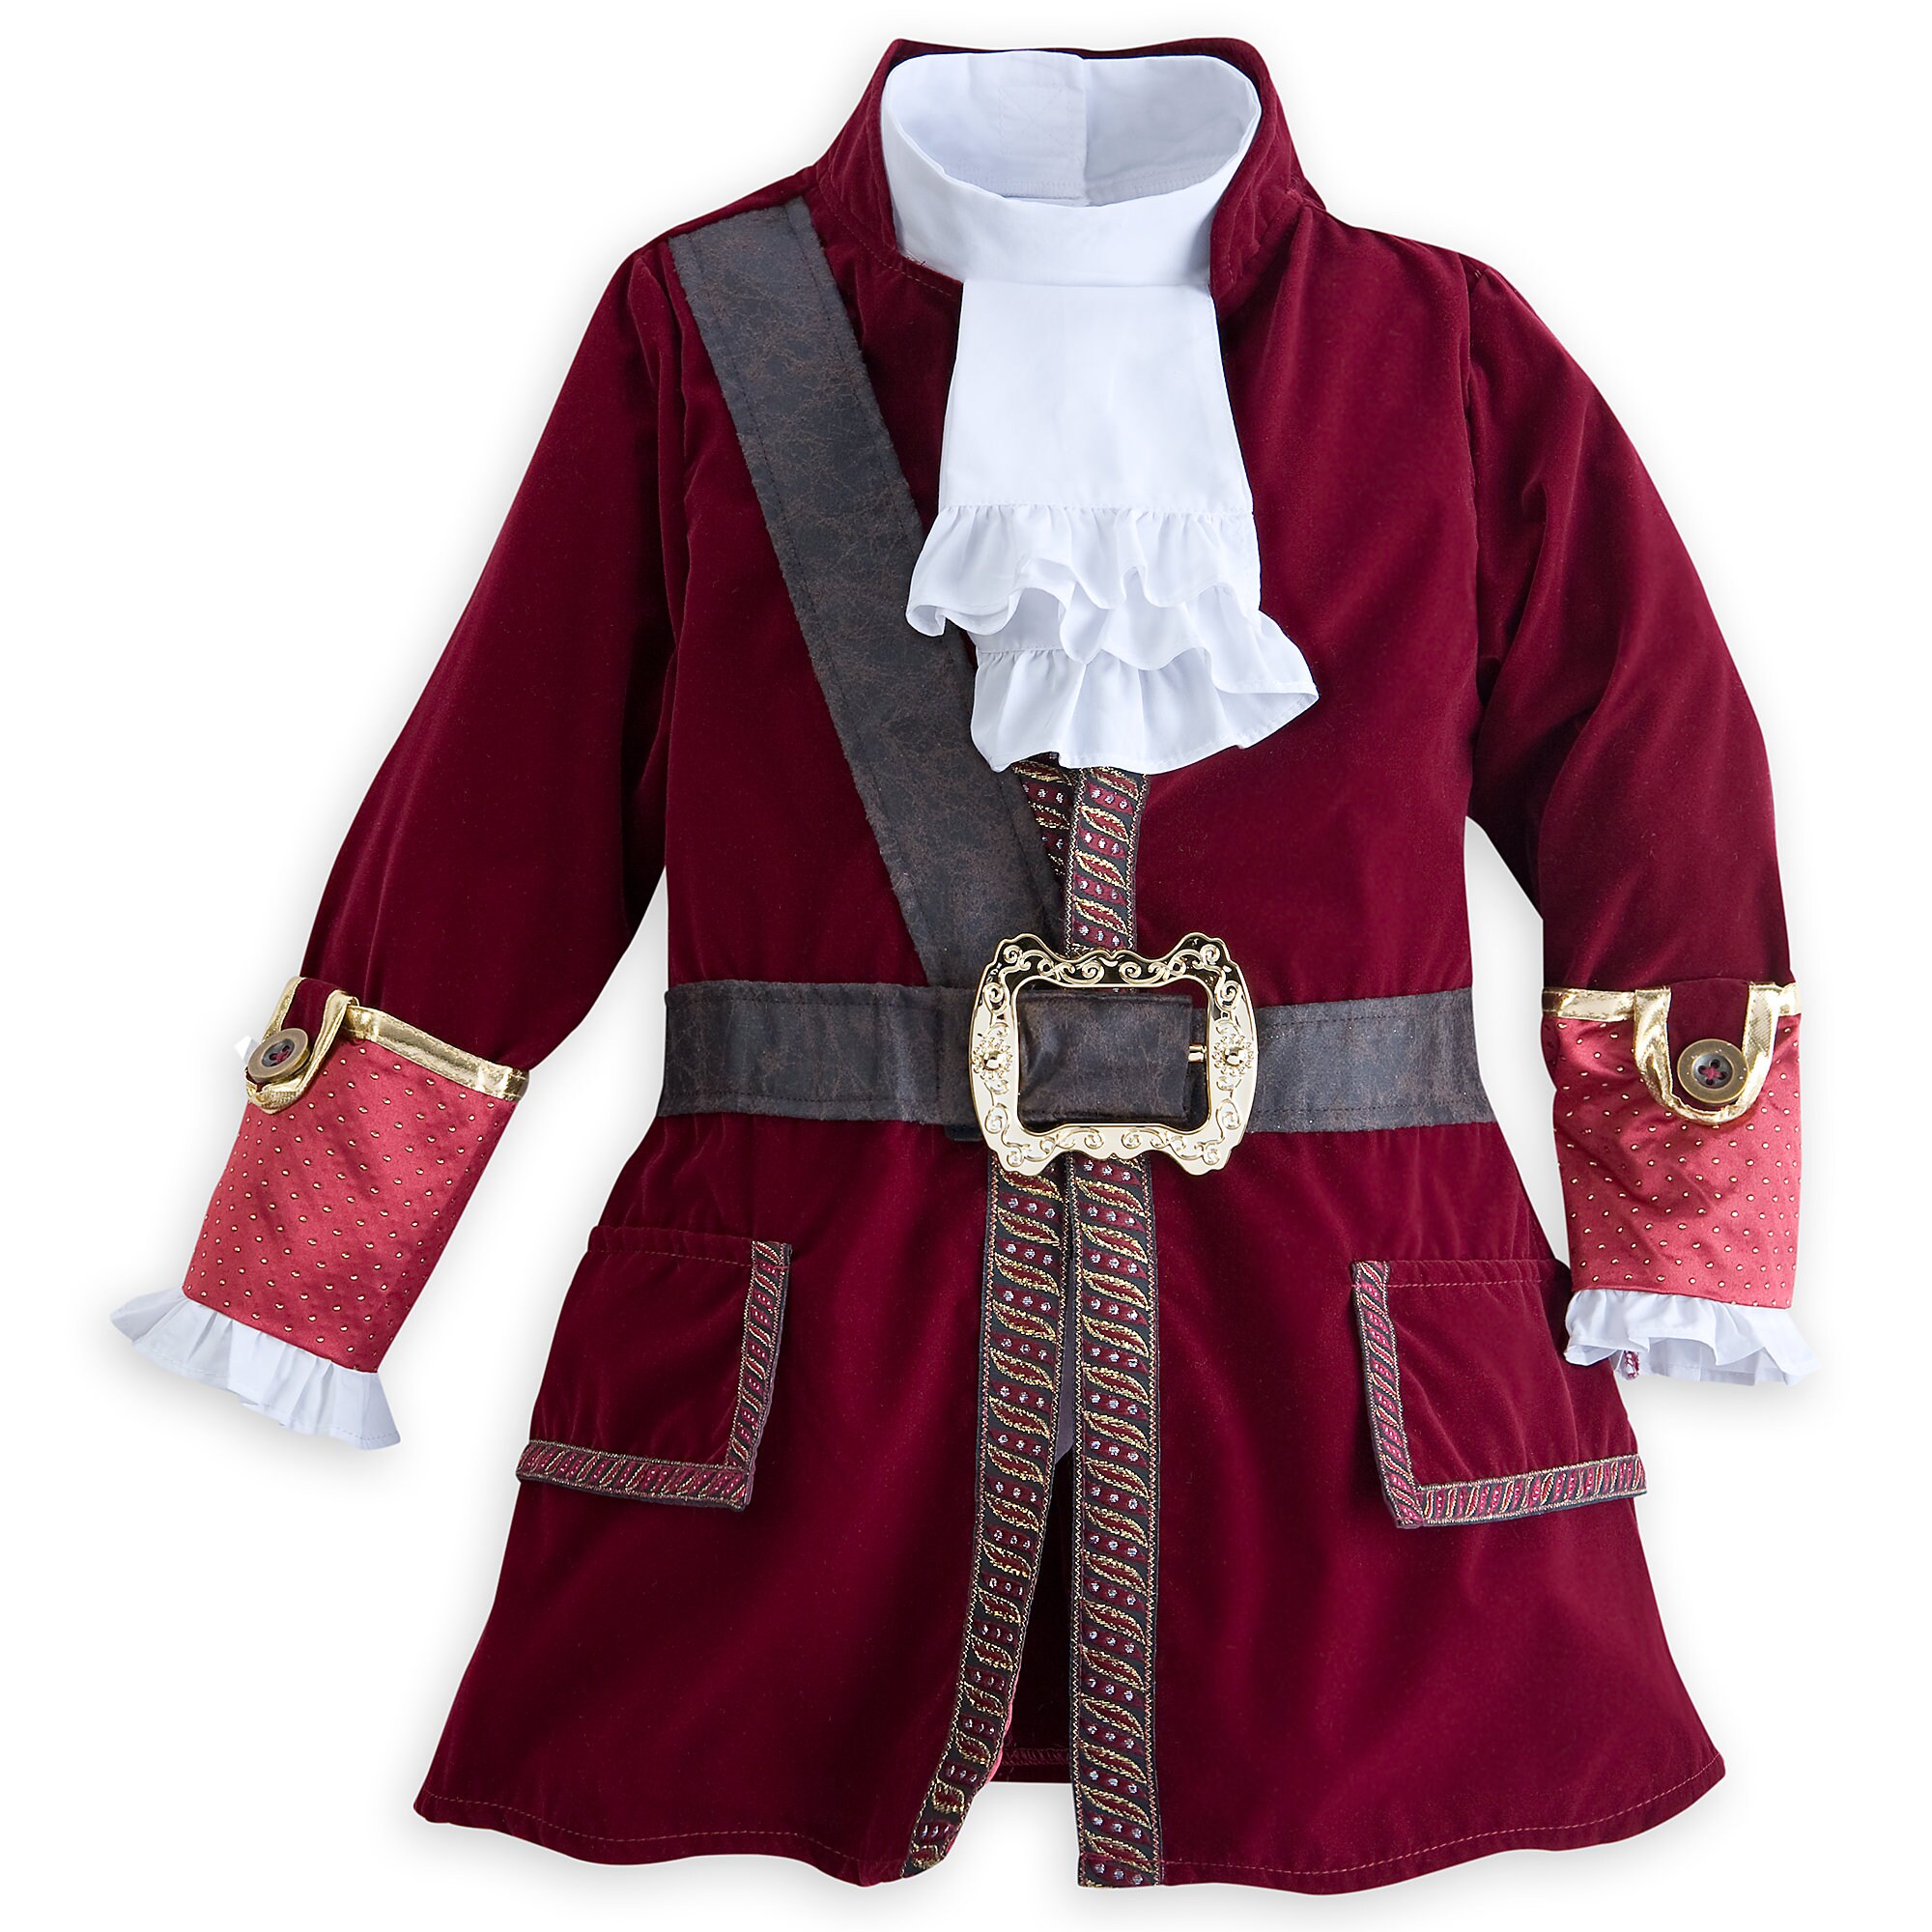 captain hook costume